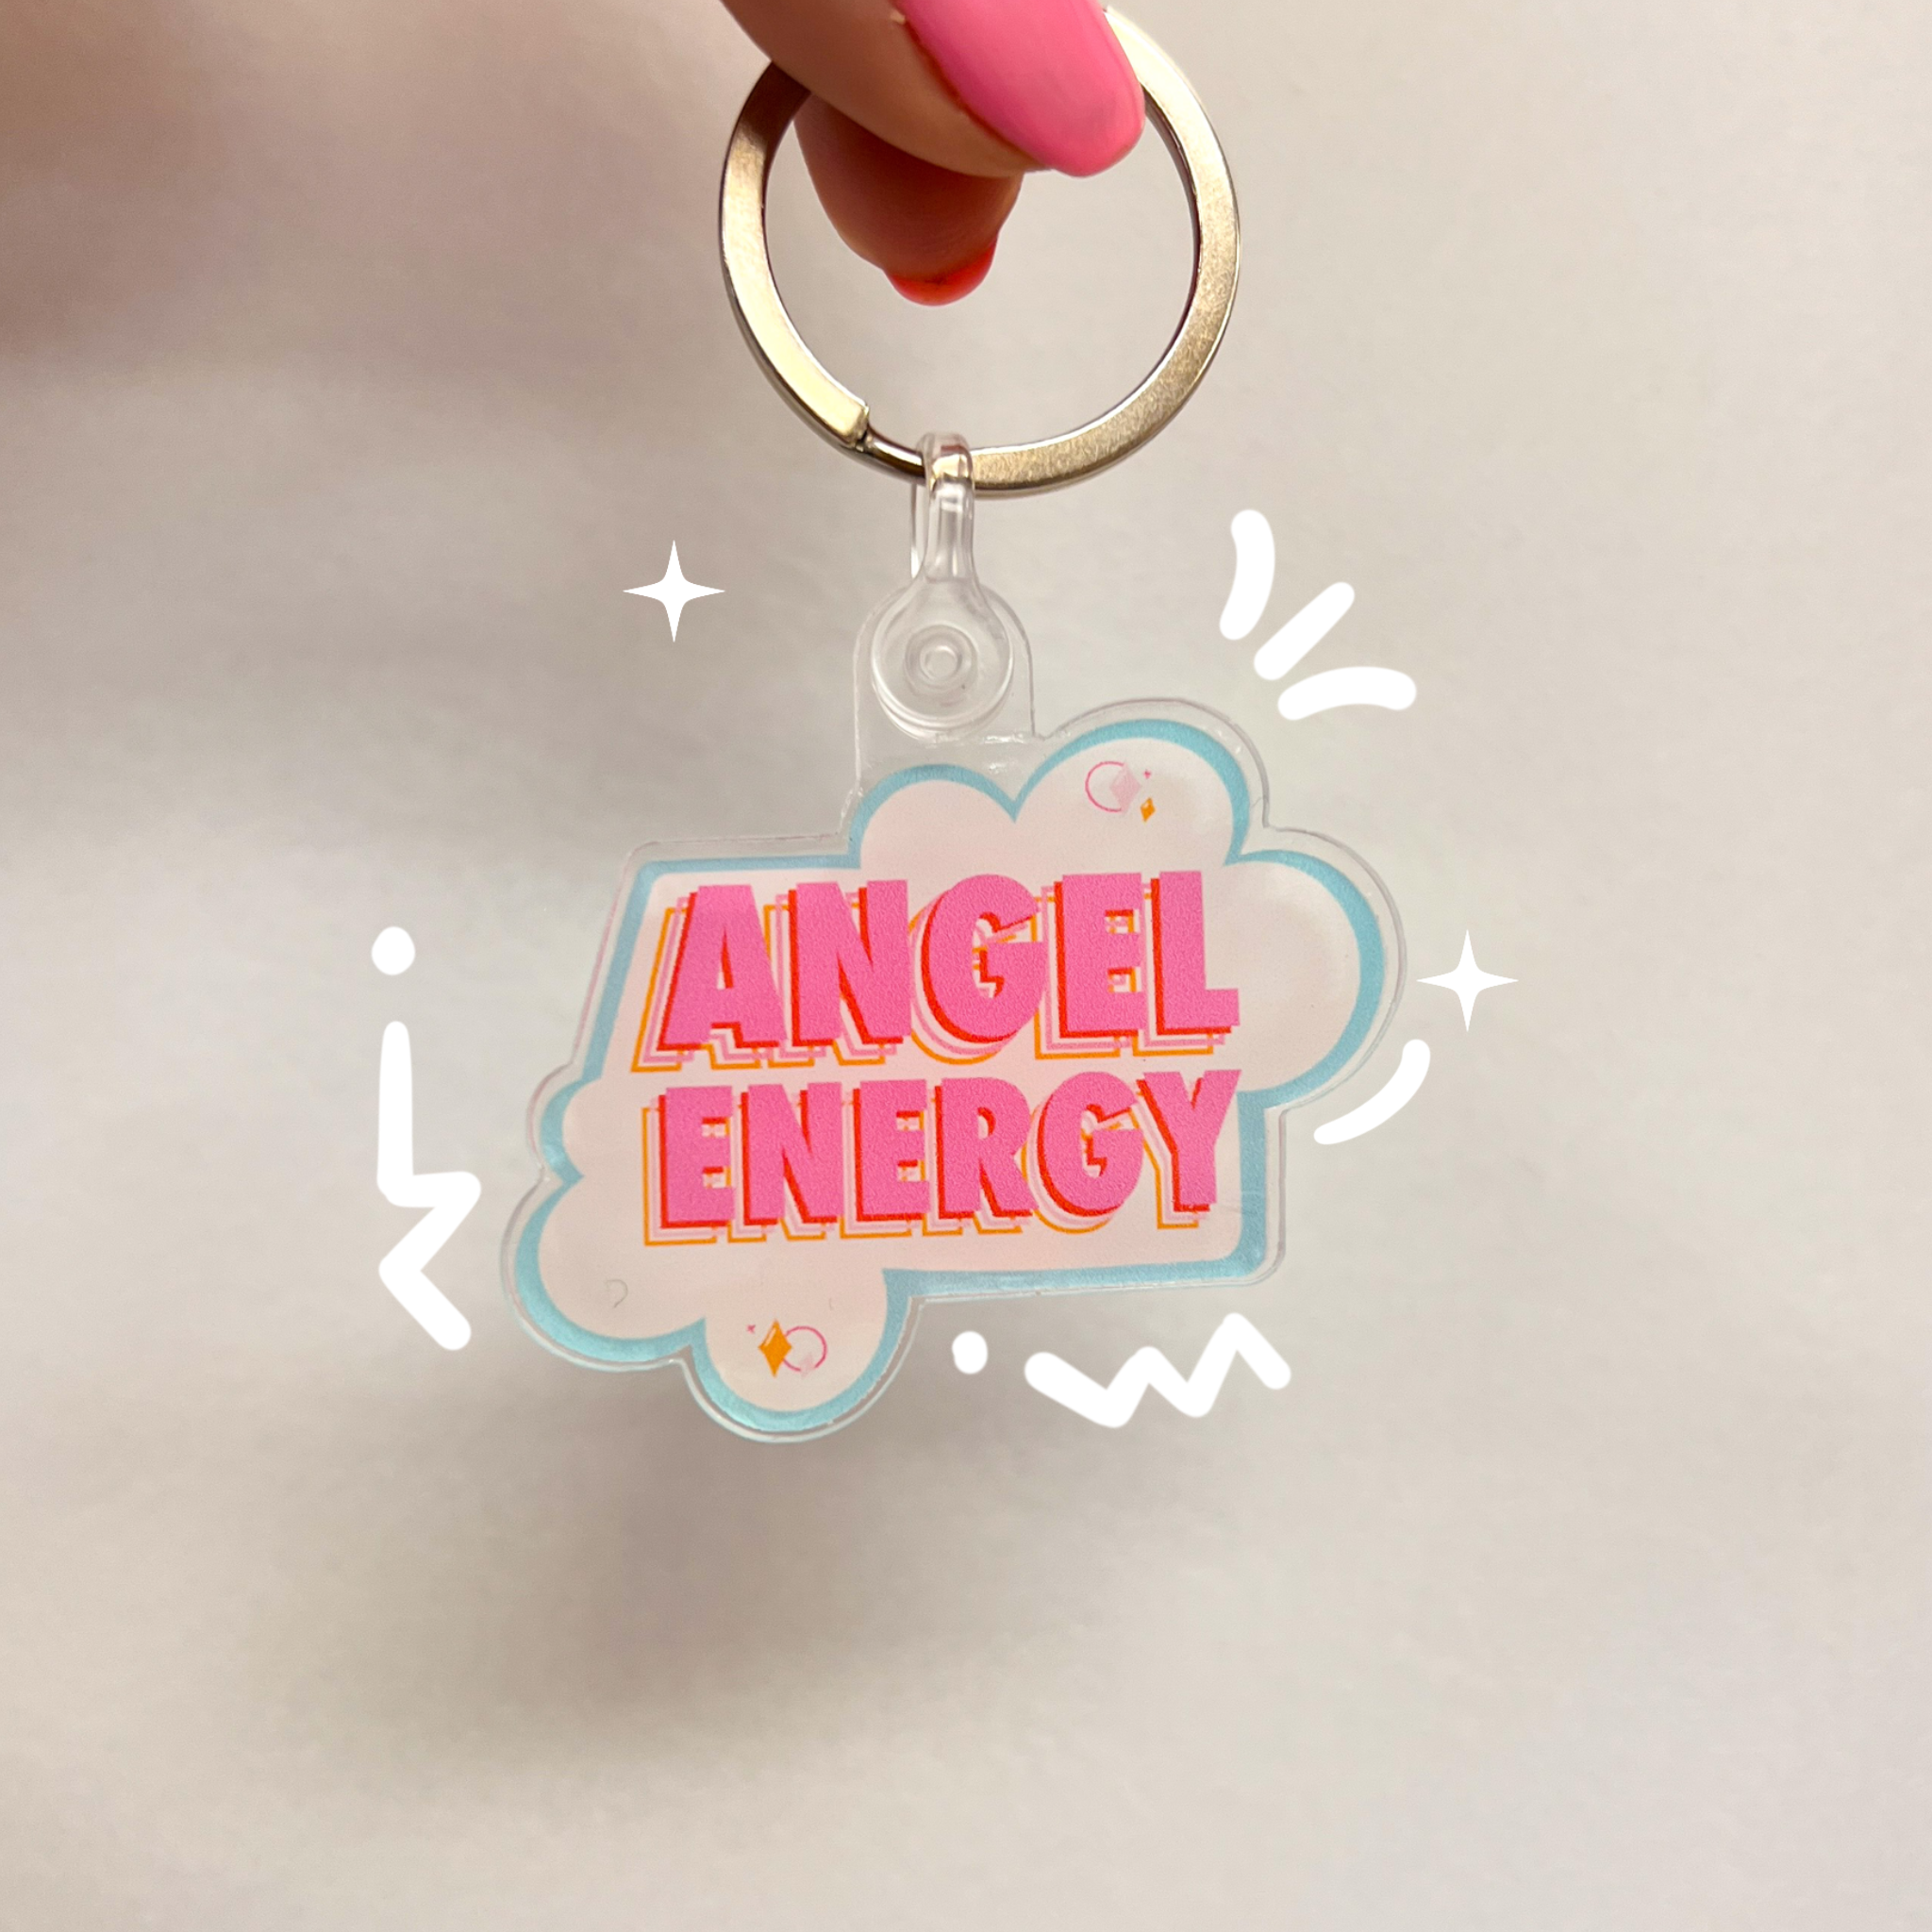 Angel energy keychain